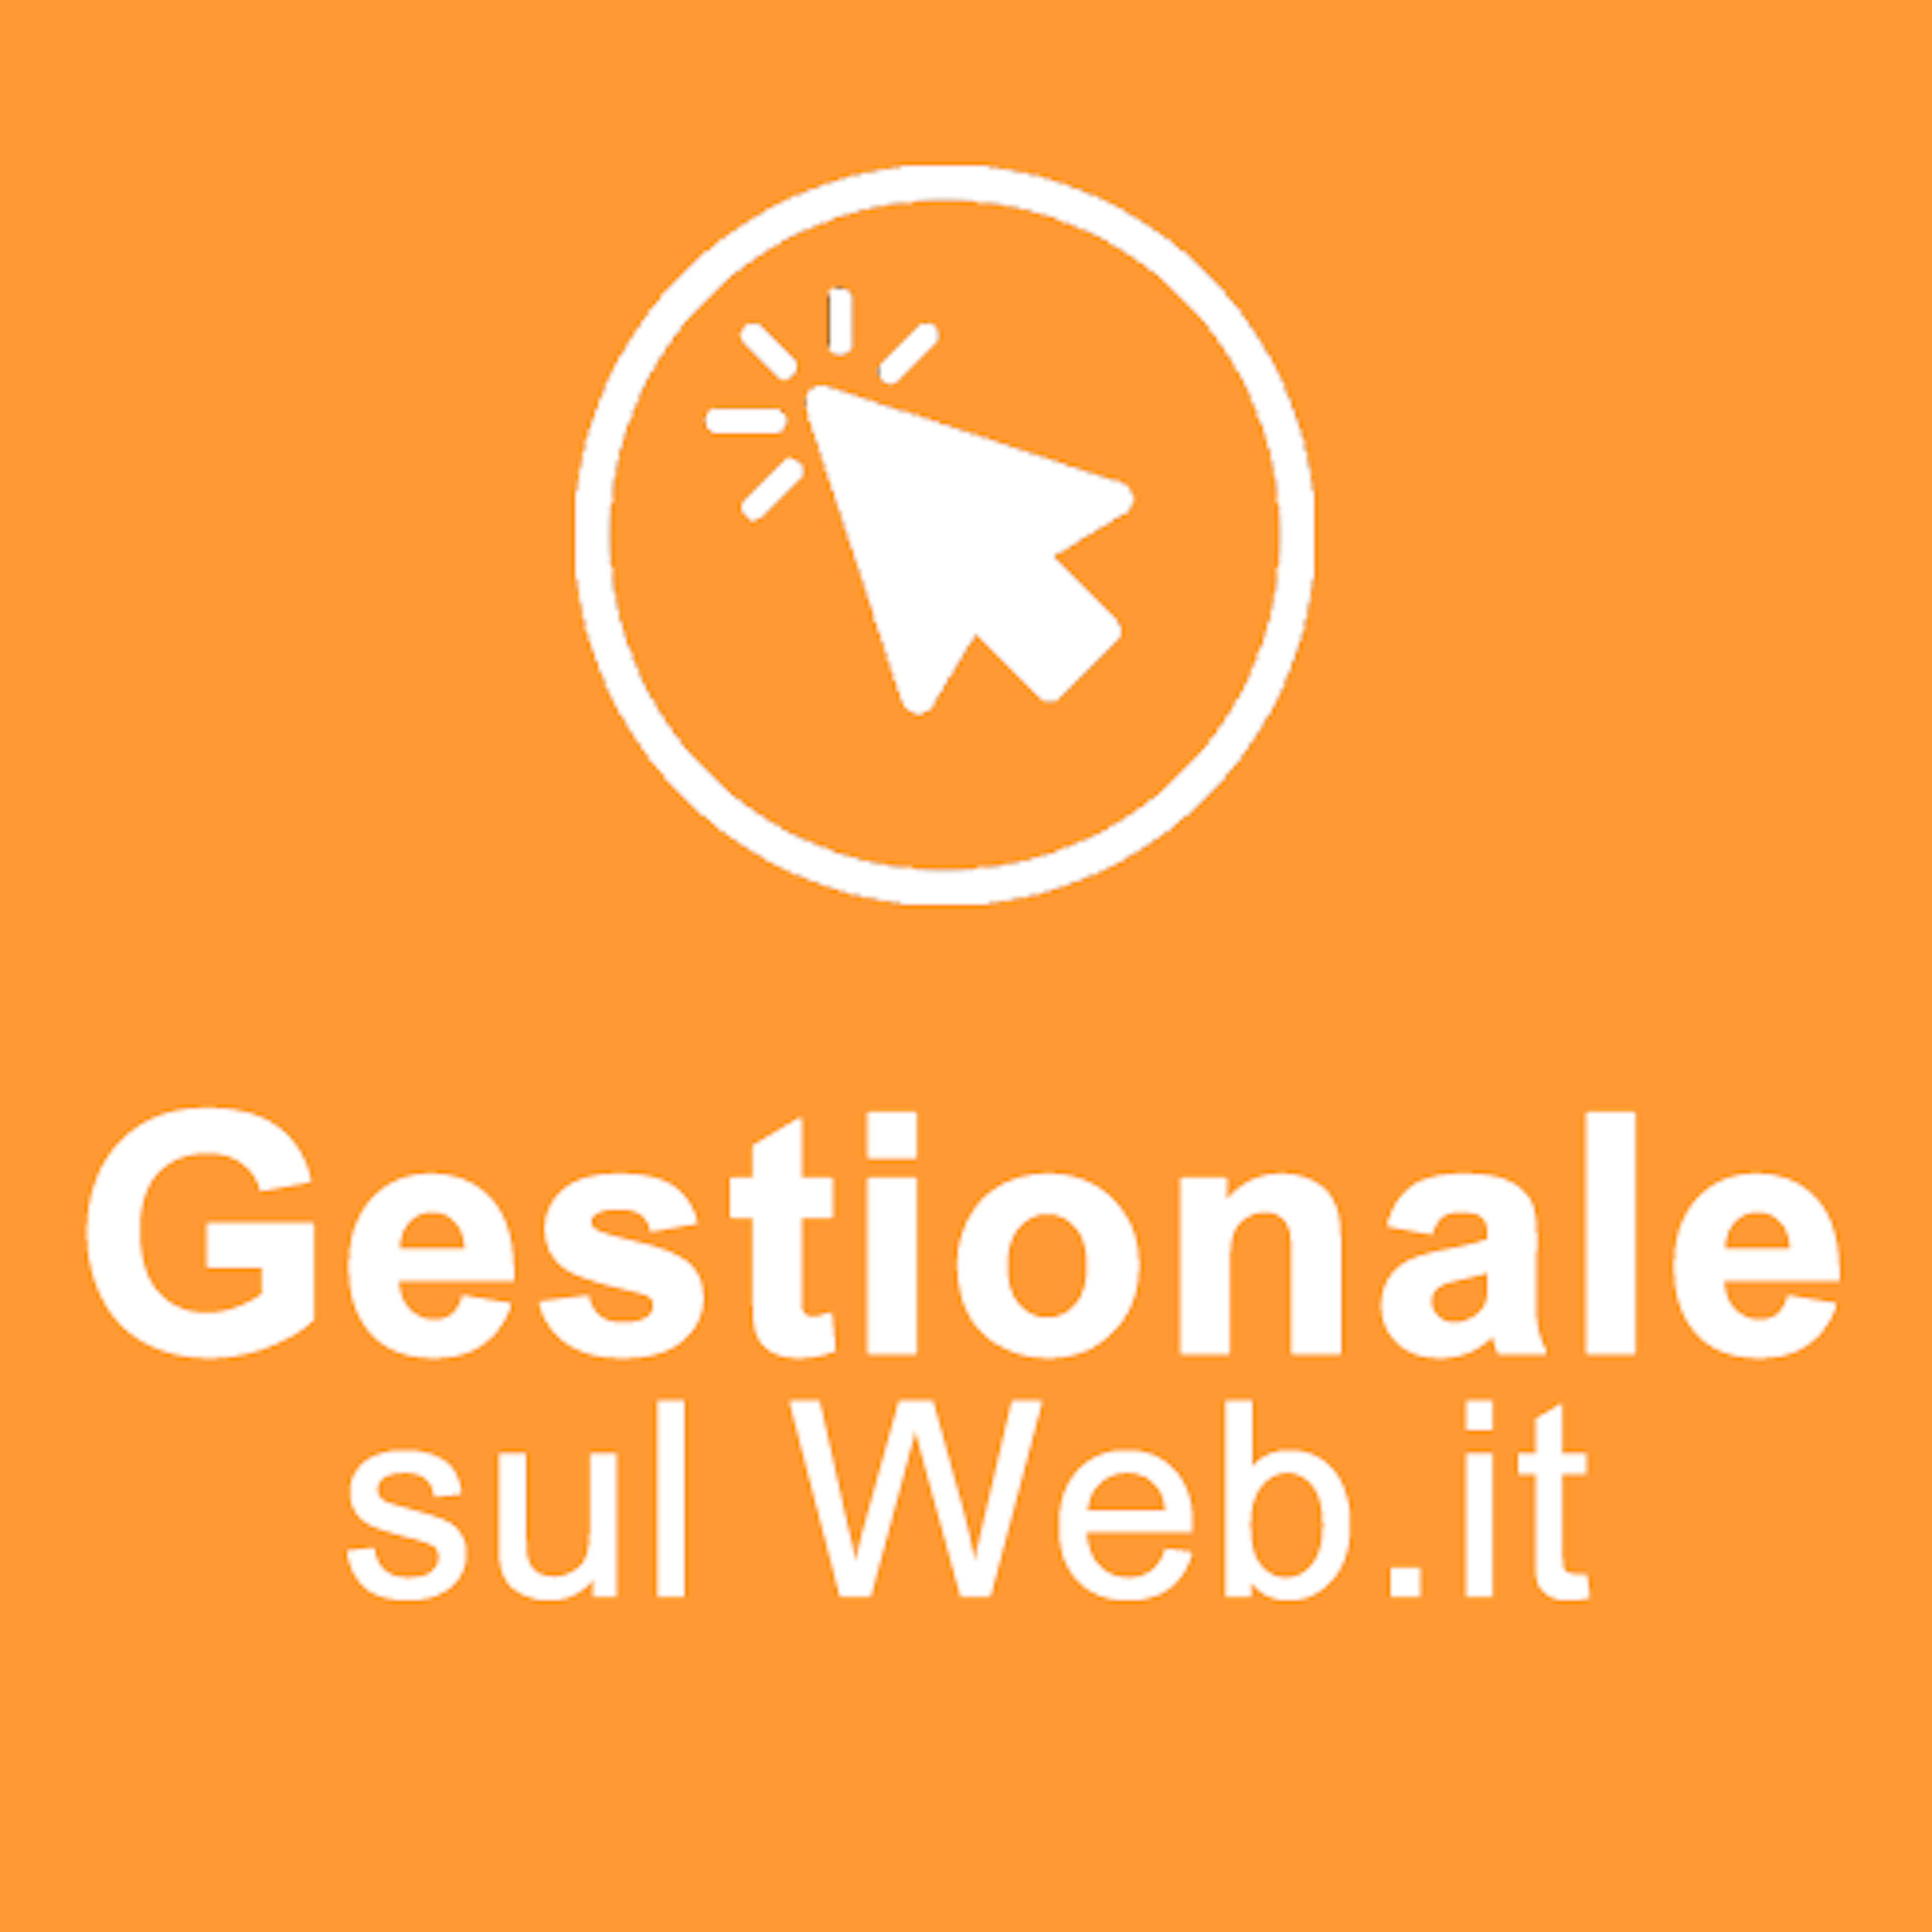 Gestionale sul Web Logo